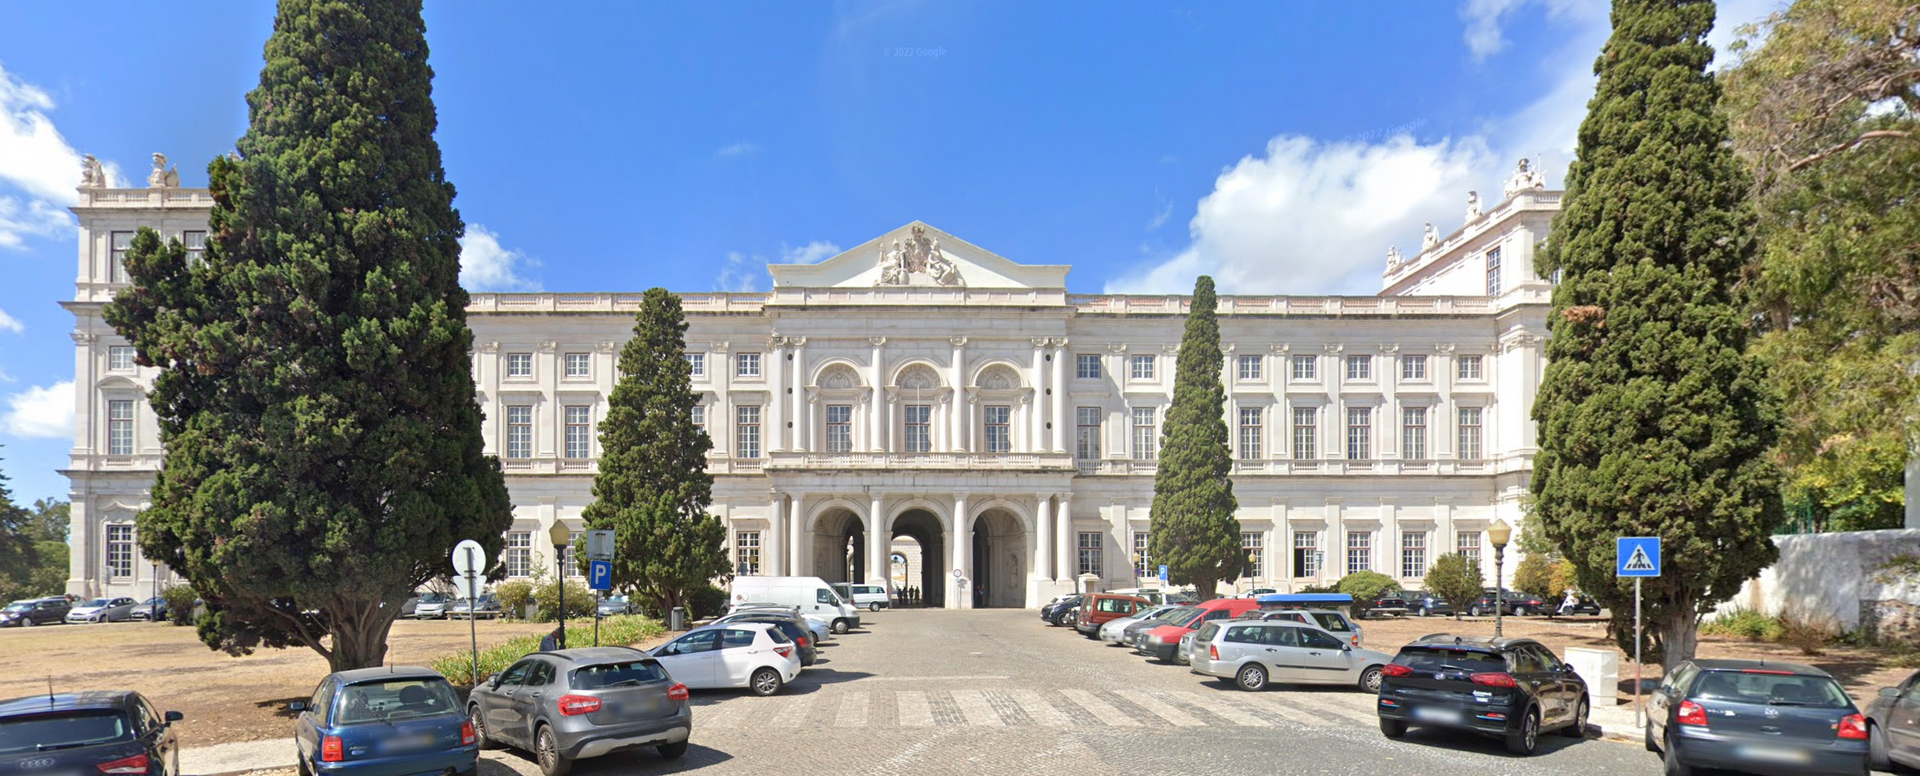 Ajuda National Palace by Google Earth